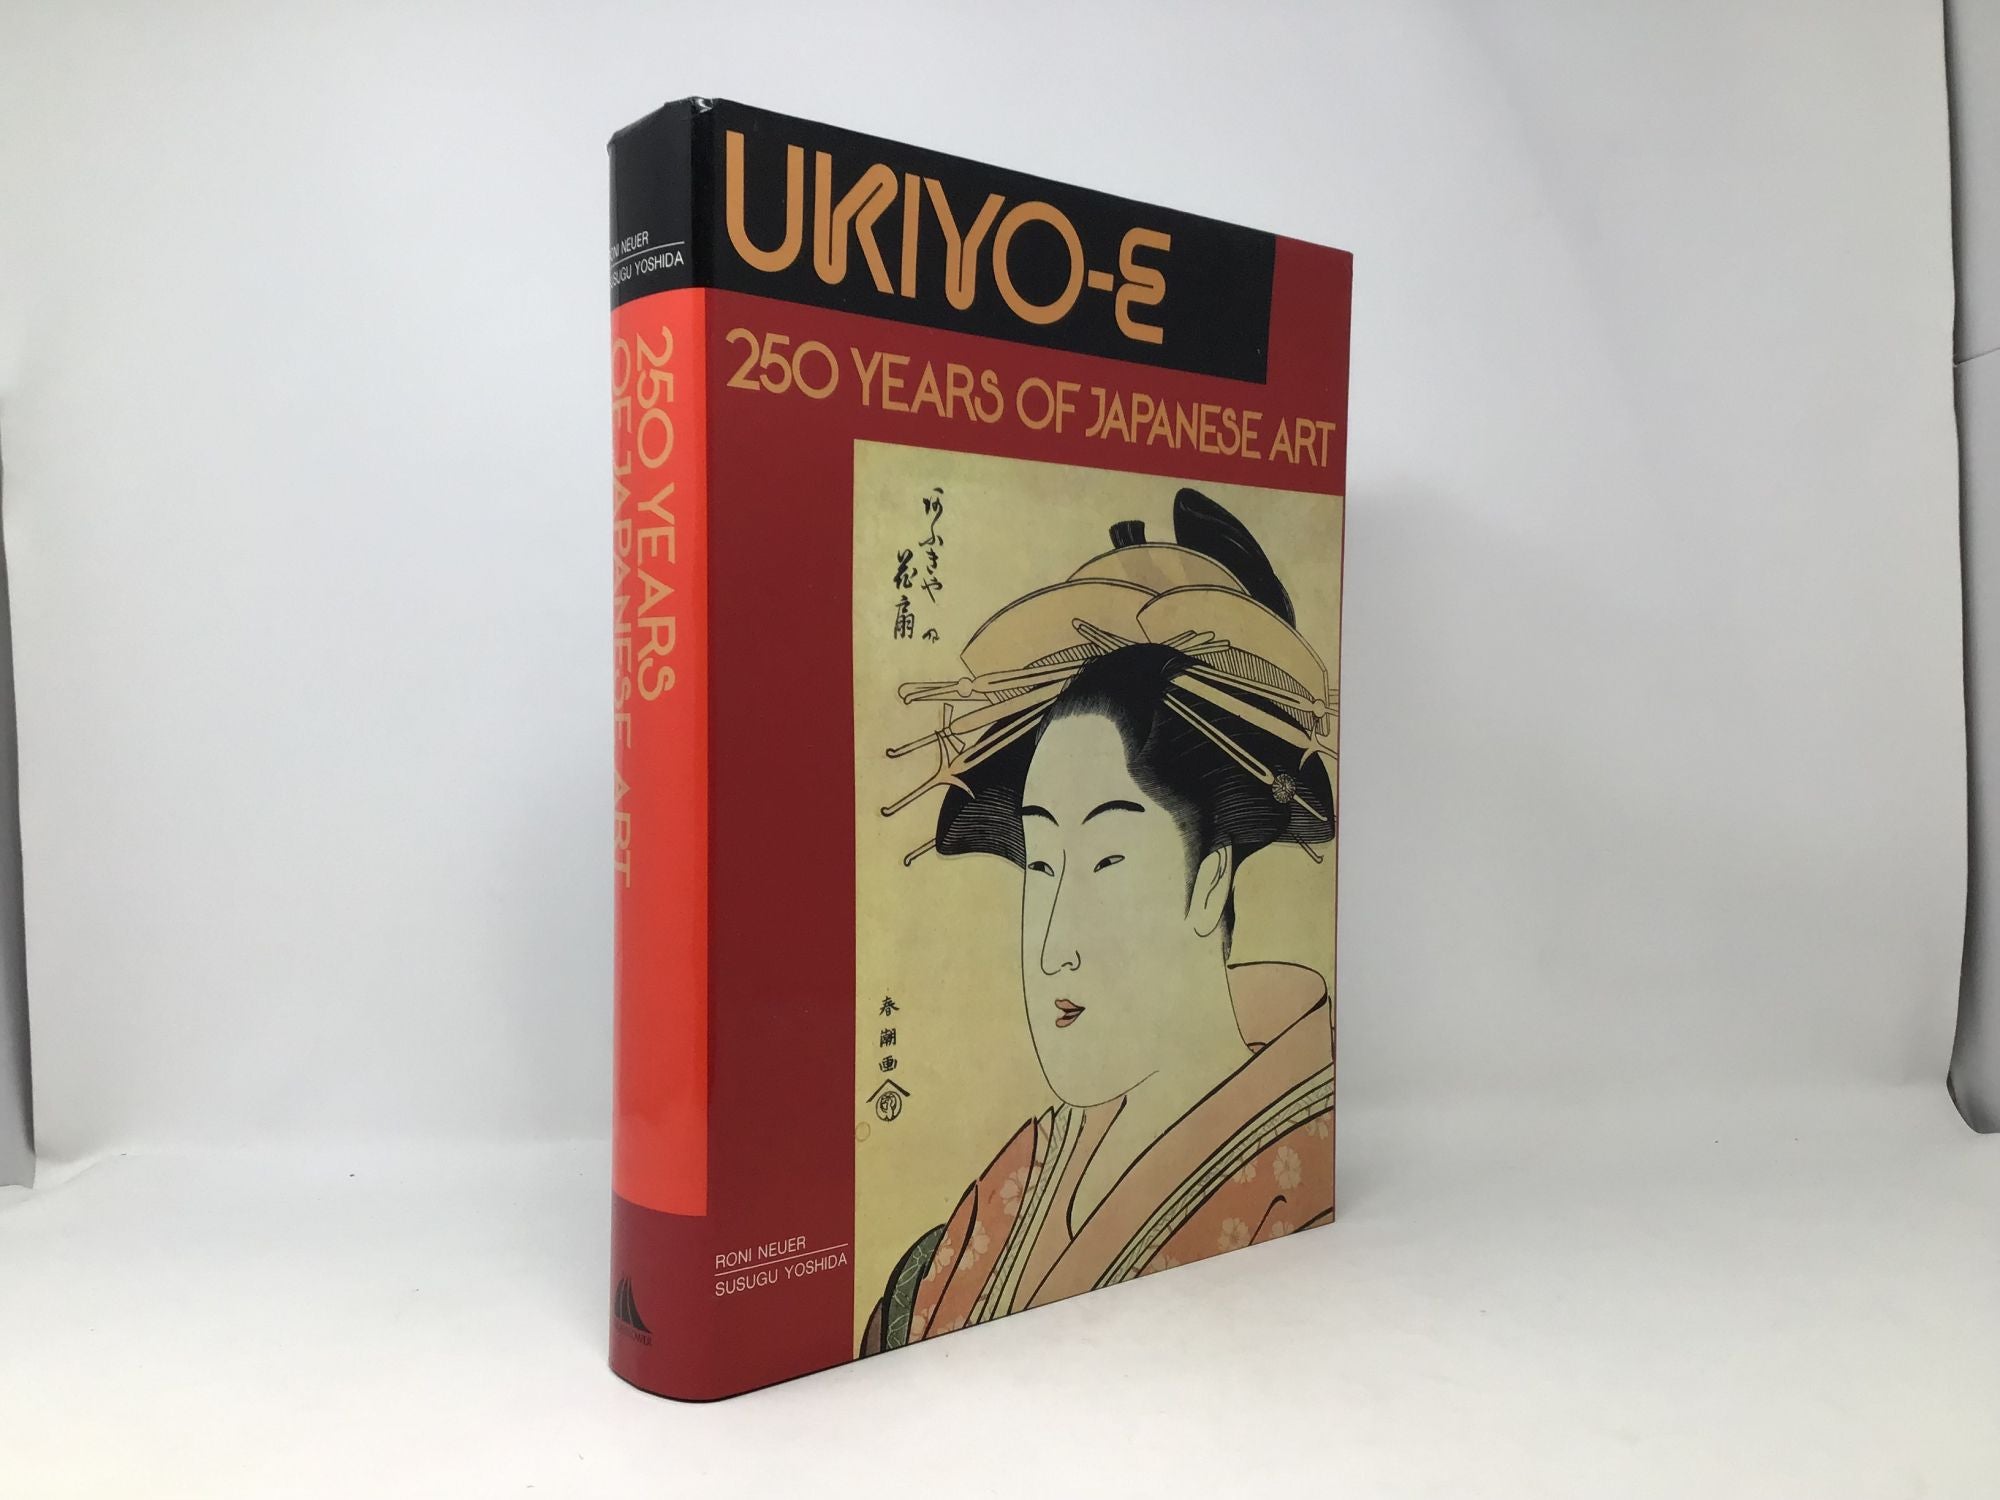 Ukiyo-e: 250 Years of Japanese Art by Roni Neuer